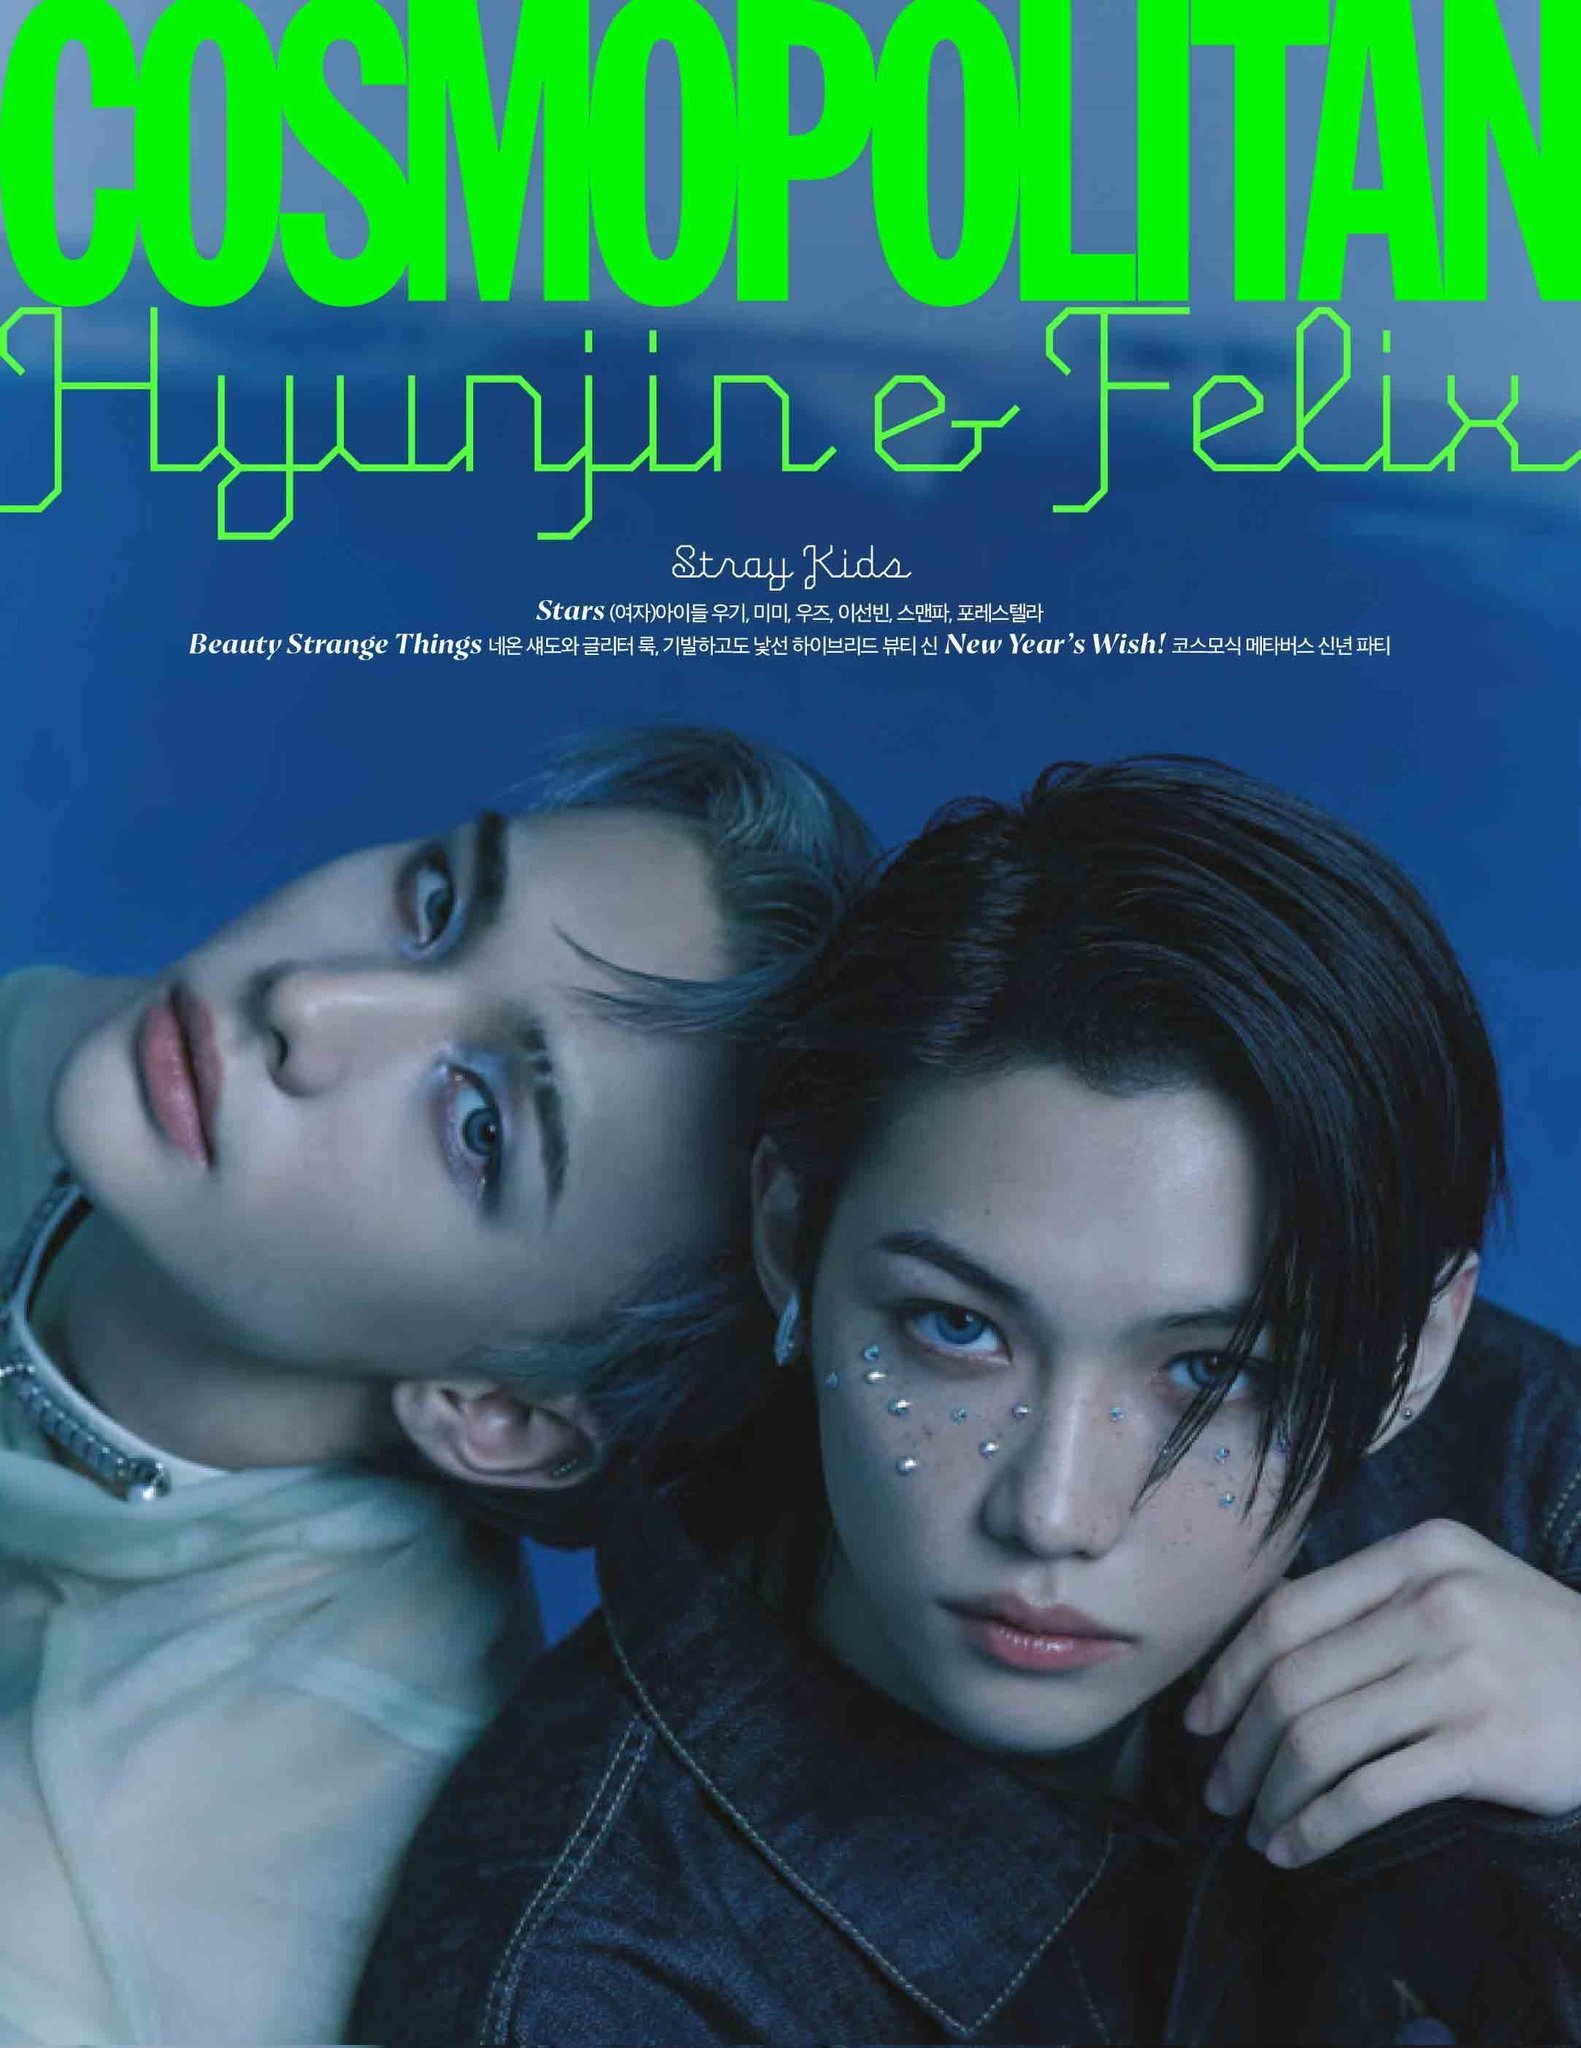 Stray Kids Hyunjin x Felix for COSMOPOLITAN Korea January Issue 